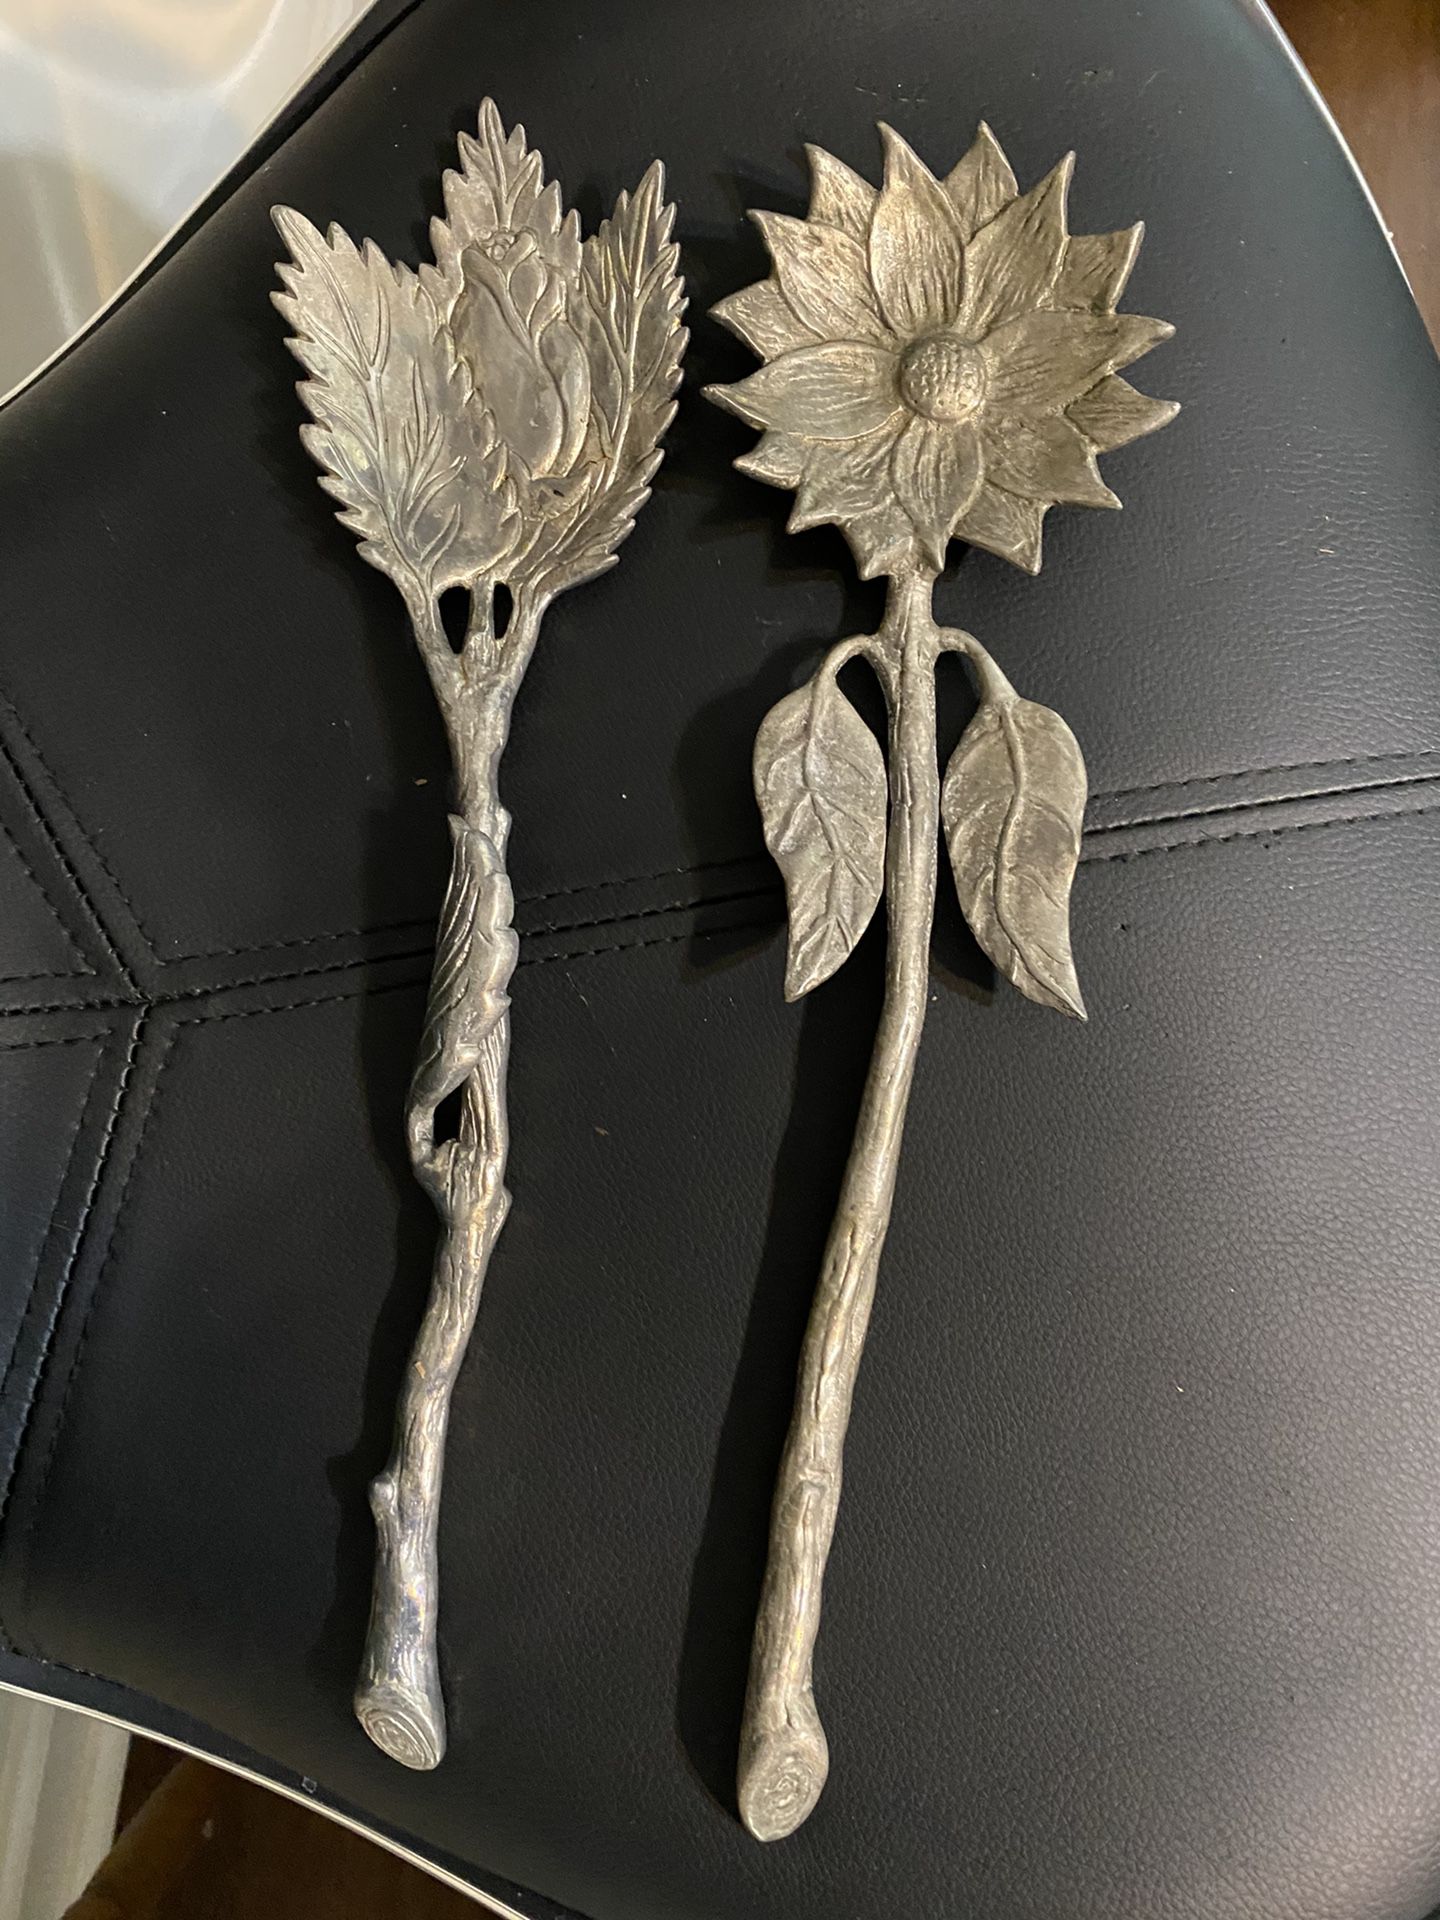 Vintage ornate sunflower salad fork and spoon